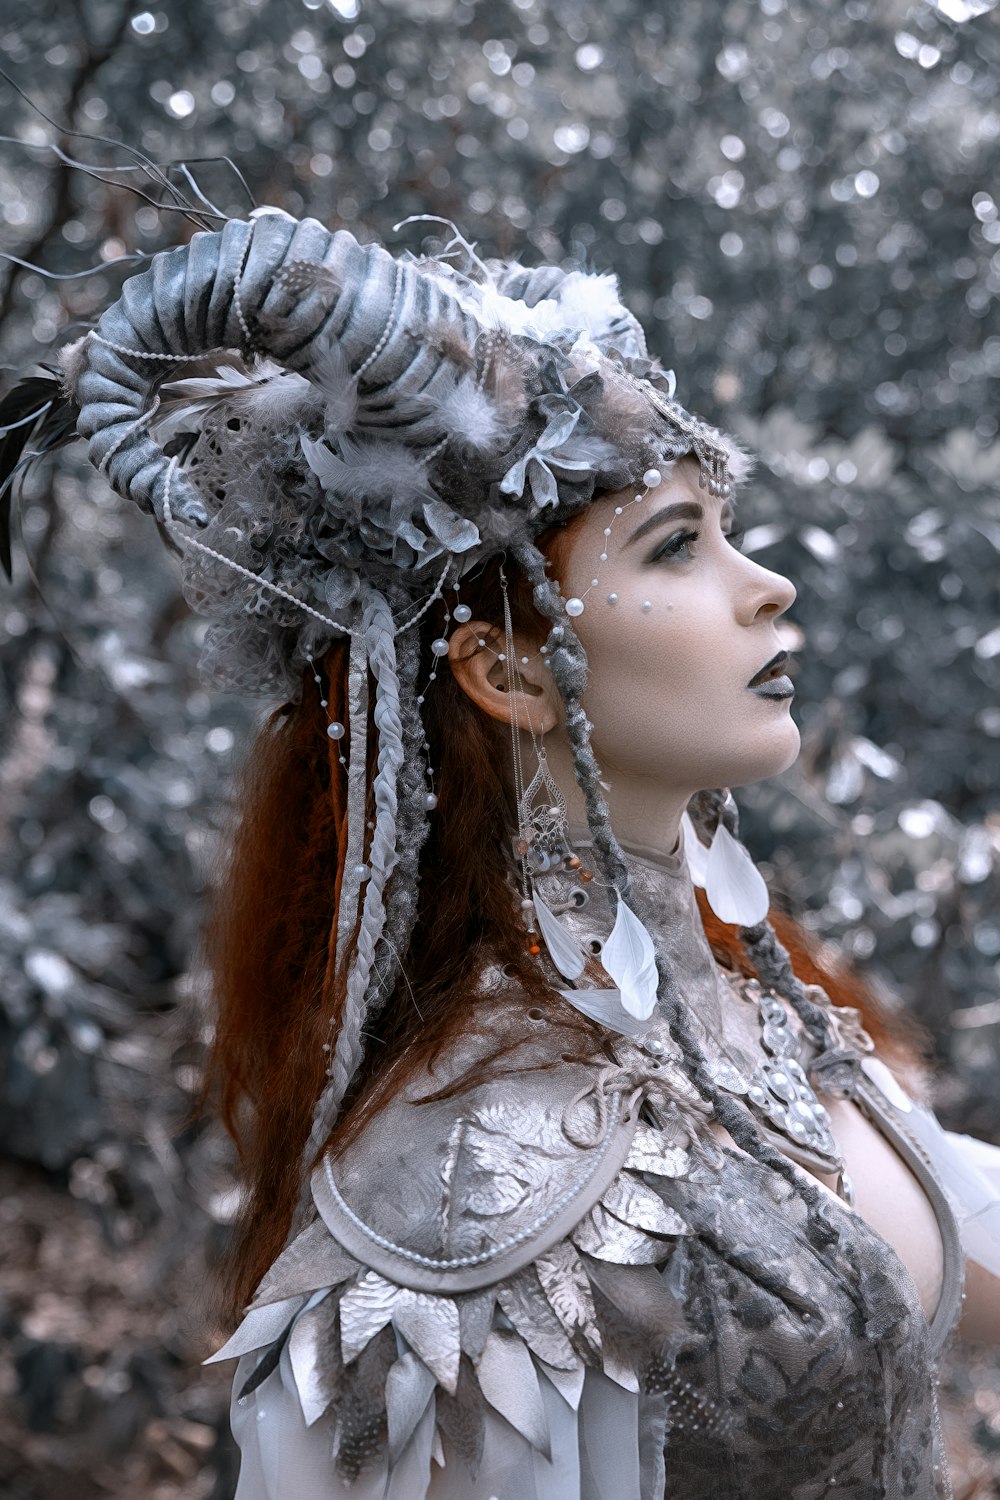 Eine Frau im Kostüm mit Federn auf dem Kopf